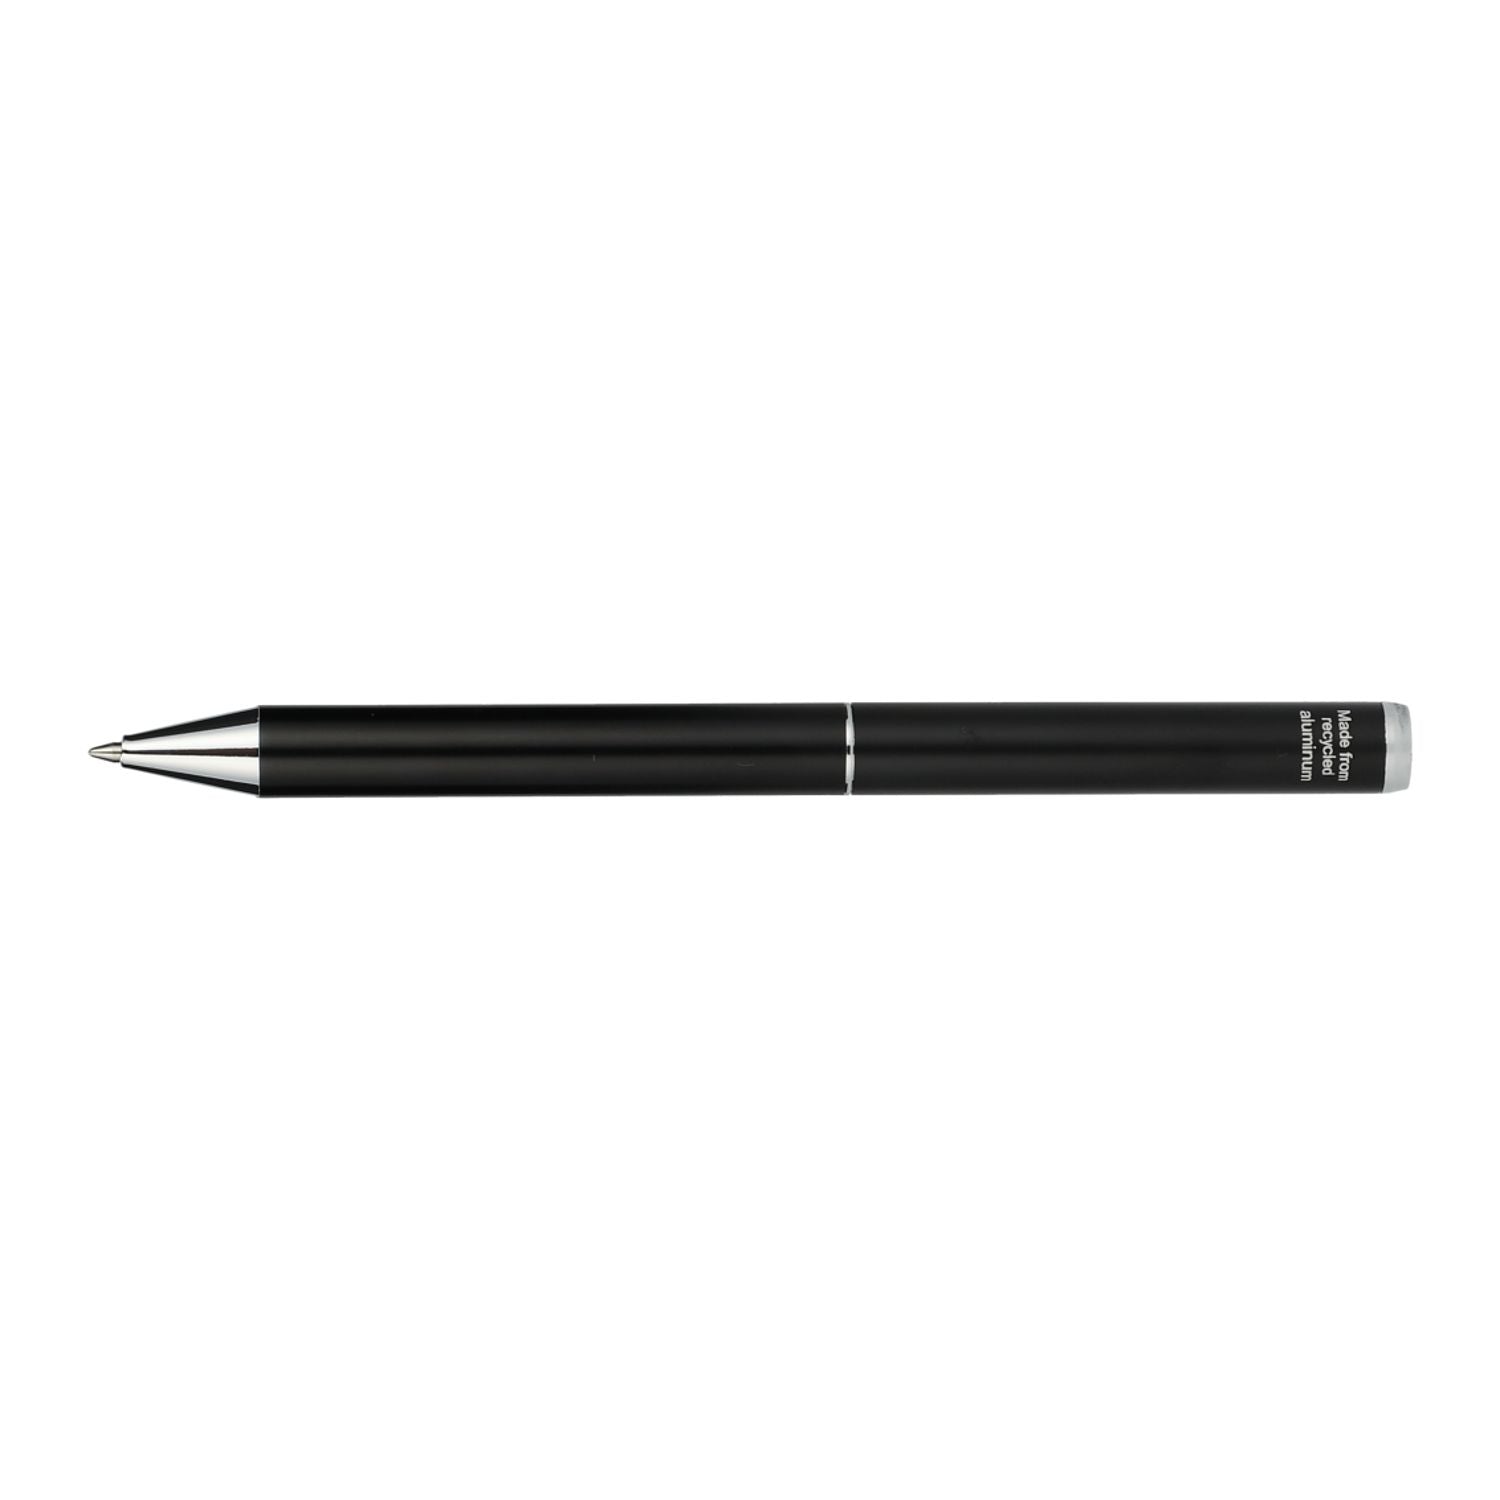 Customized recycled aluminum ultra gel ballpoint pen in black.